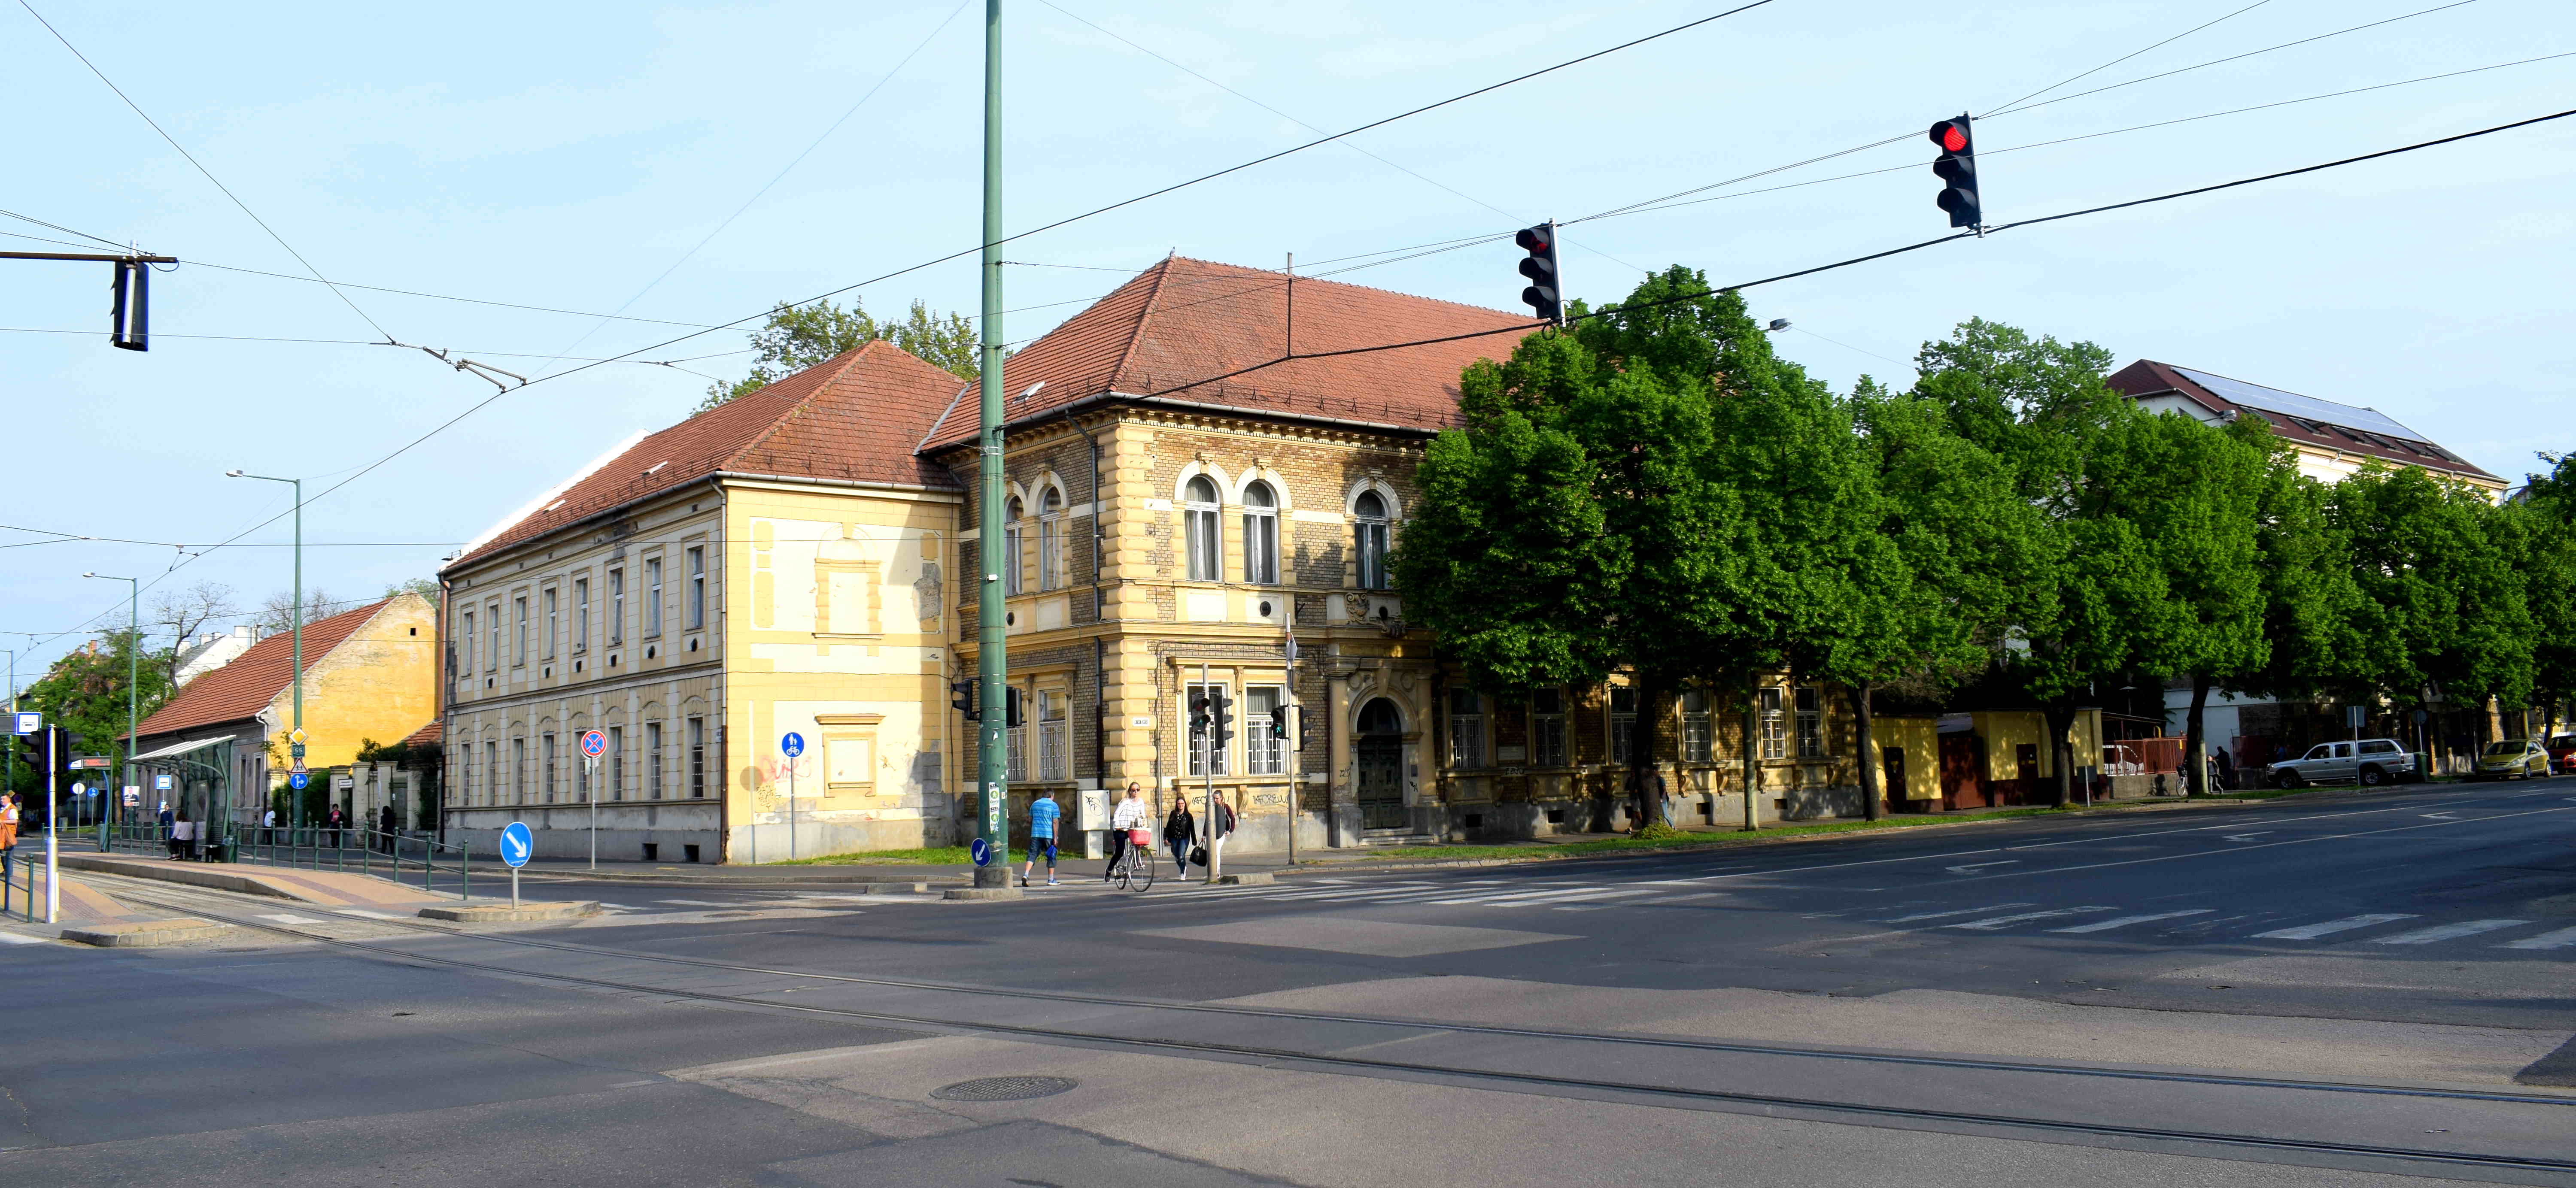 Szeged, Hungary Architecture